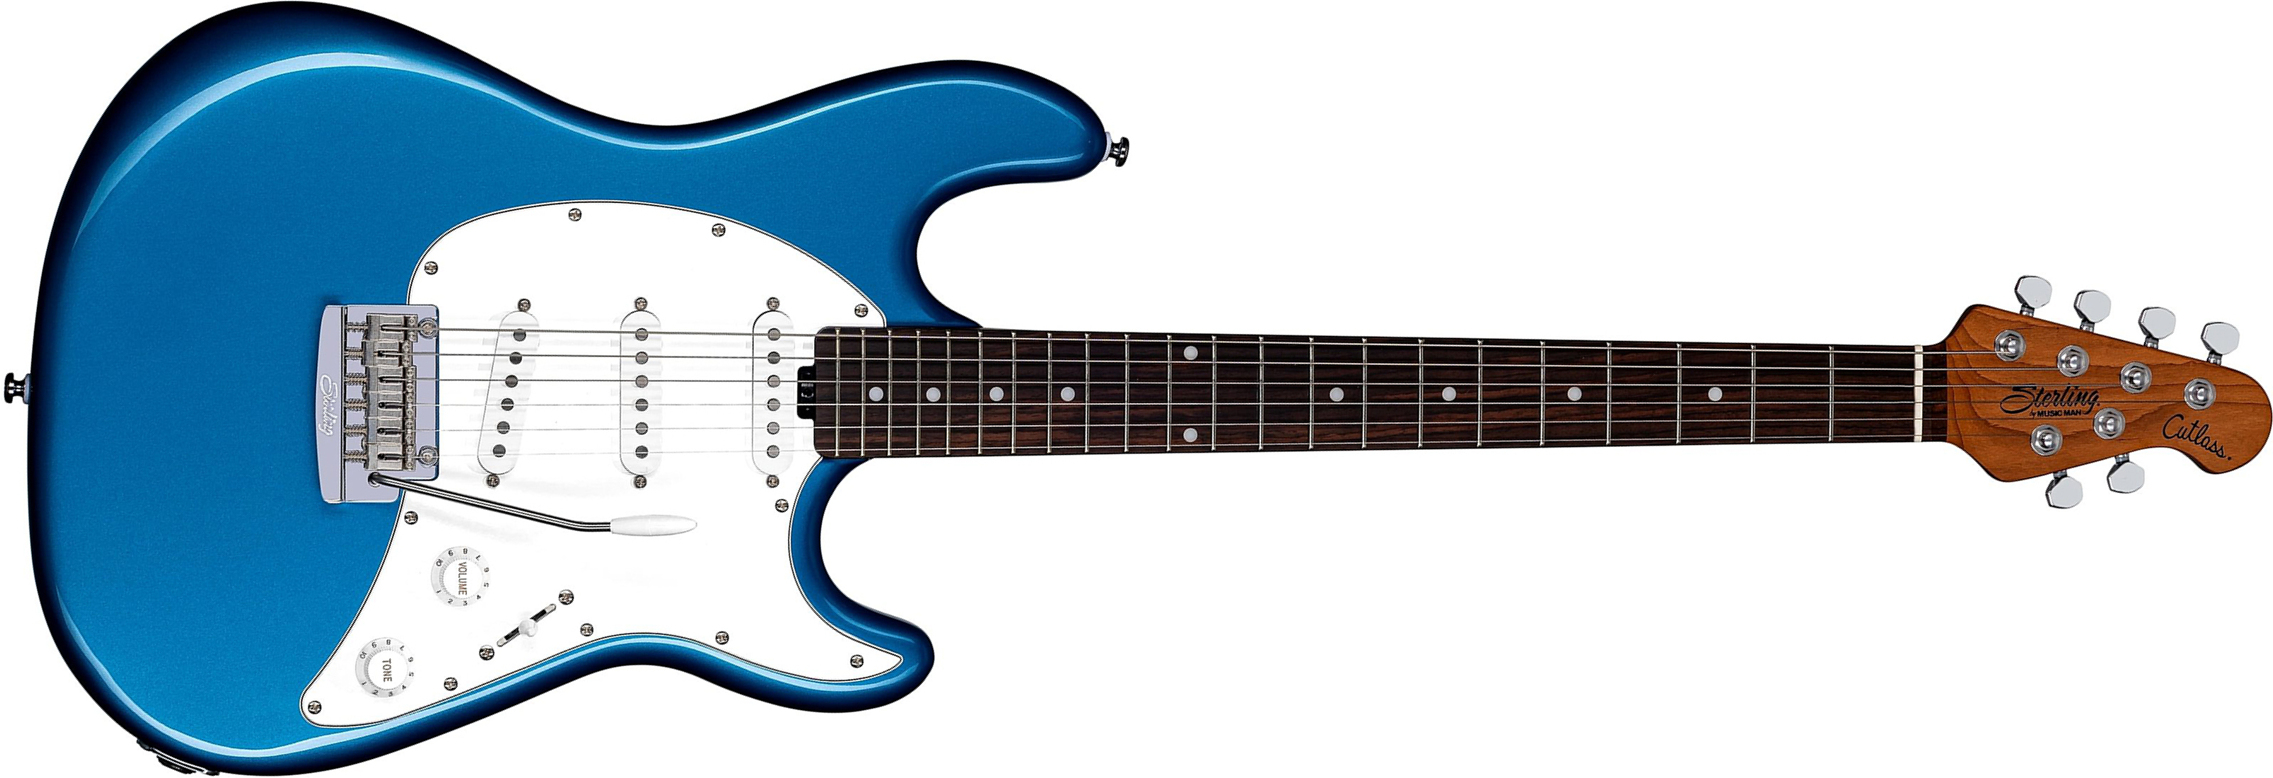 Sterling By Musicman Cutlass Ct50sss 3s Trem Rw - Toluca Lake Blue - Str shape electric guitar - Main picture